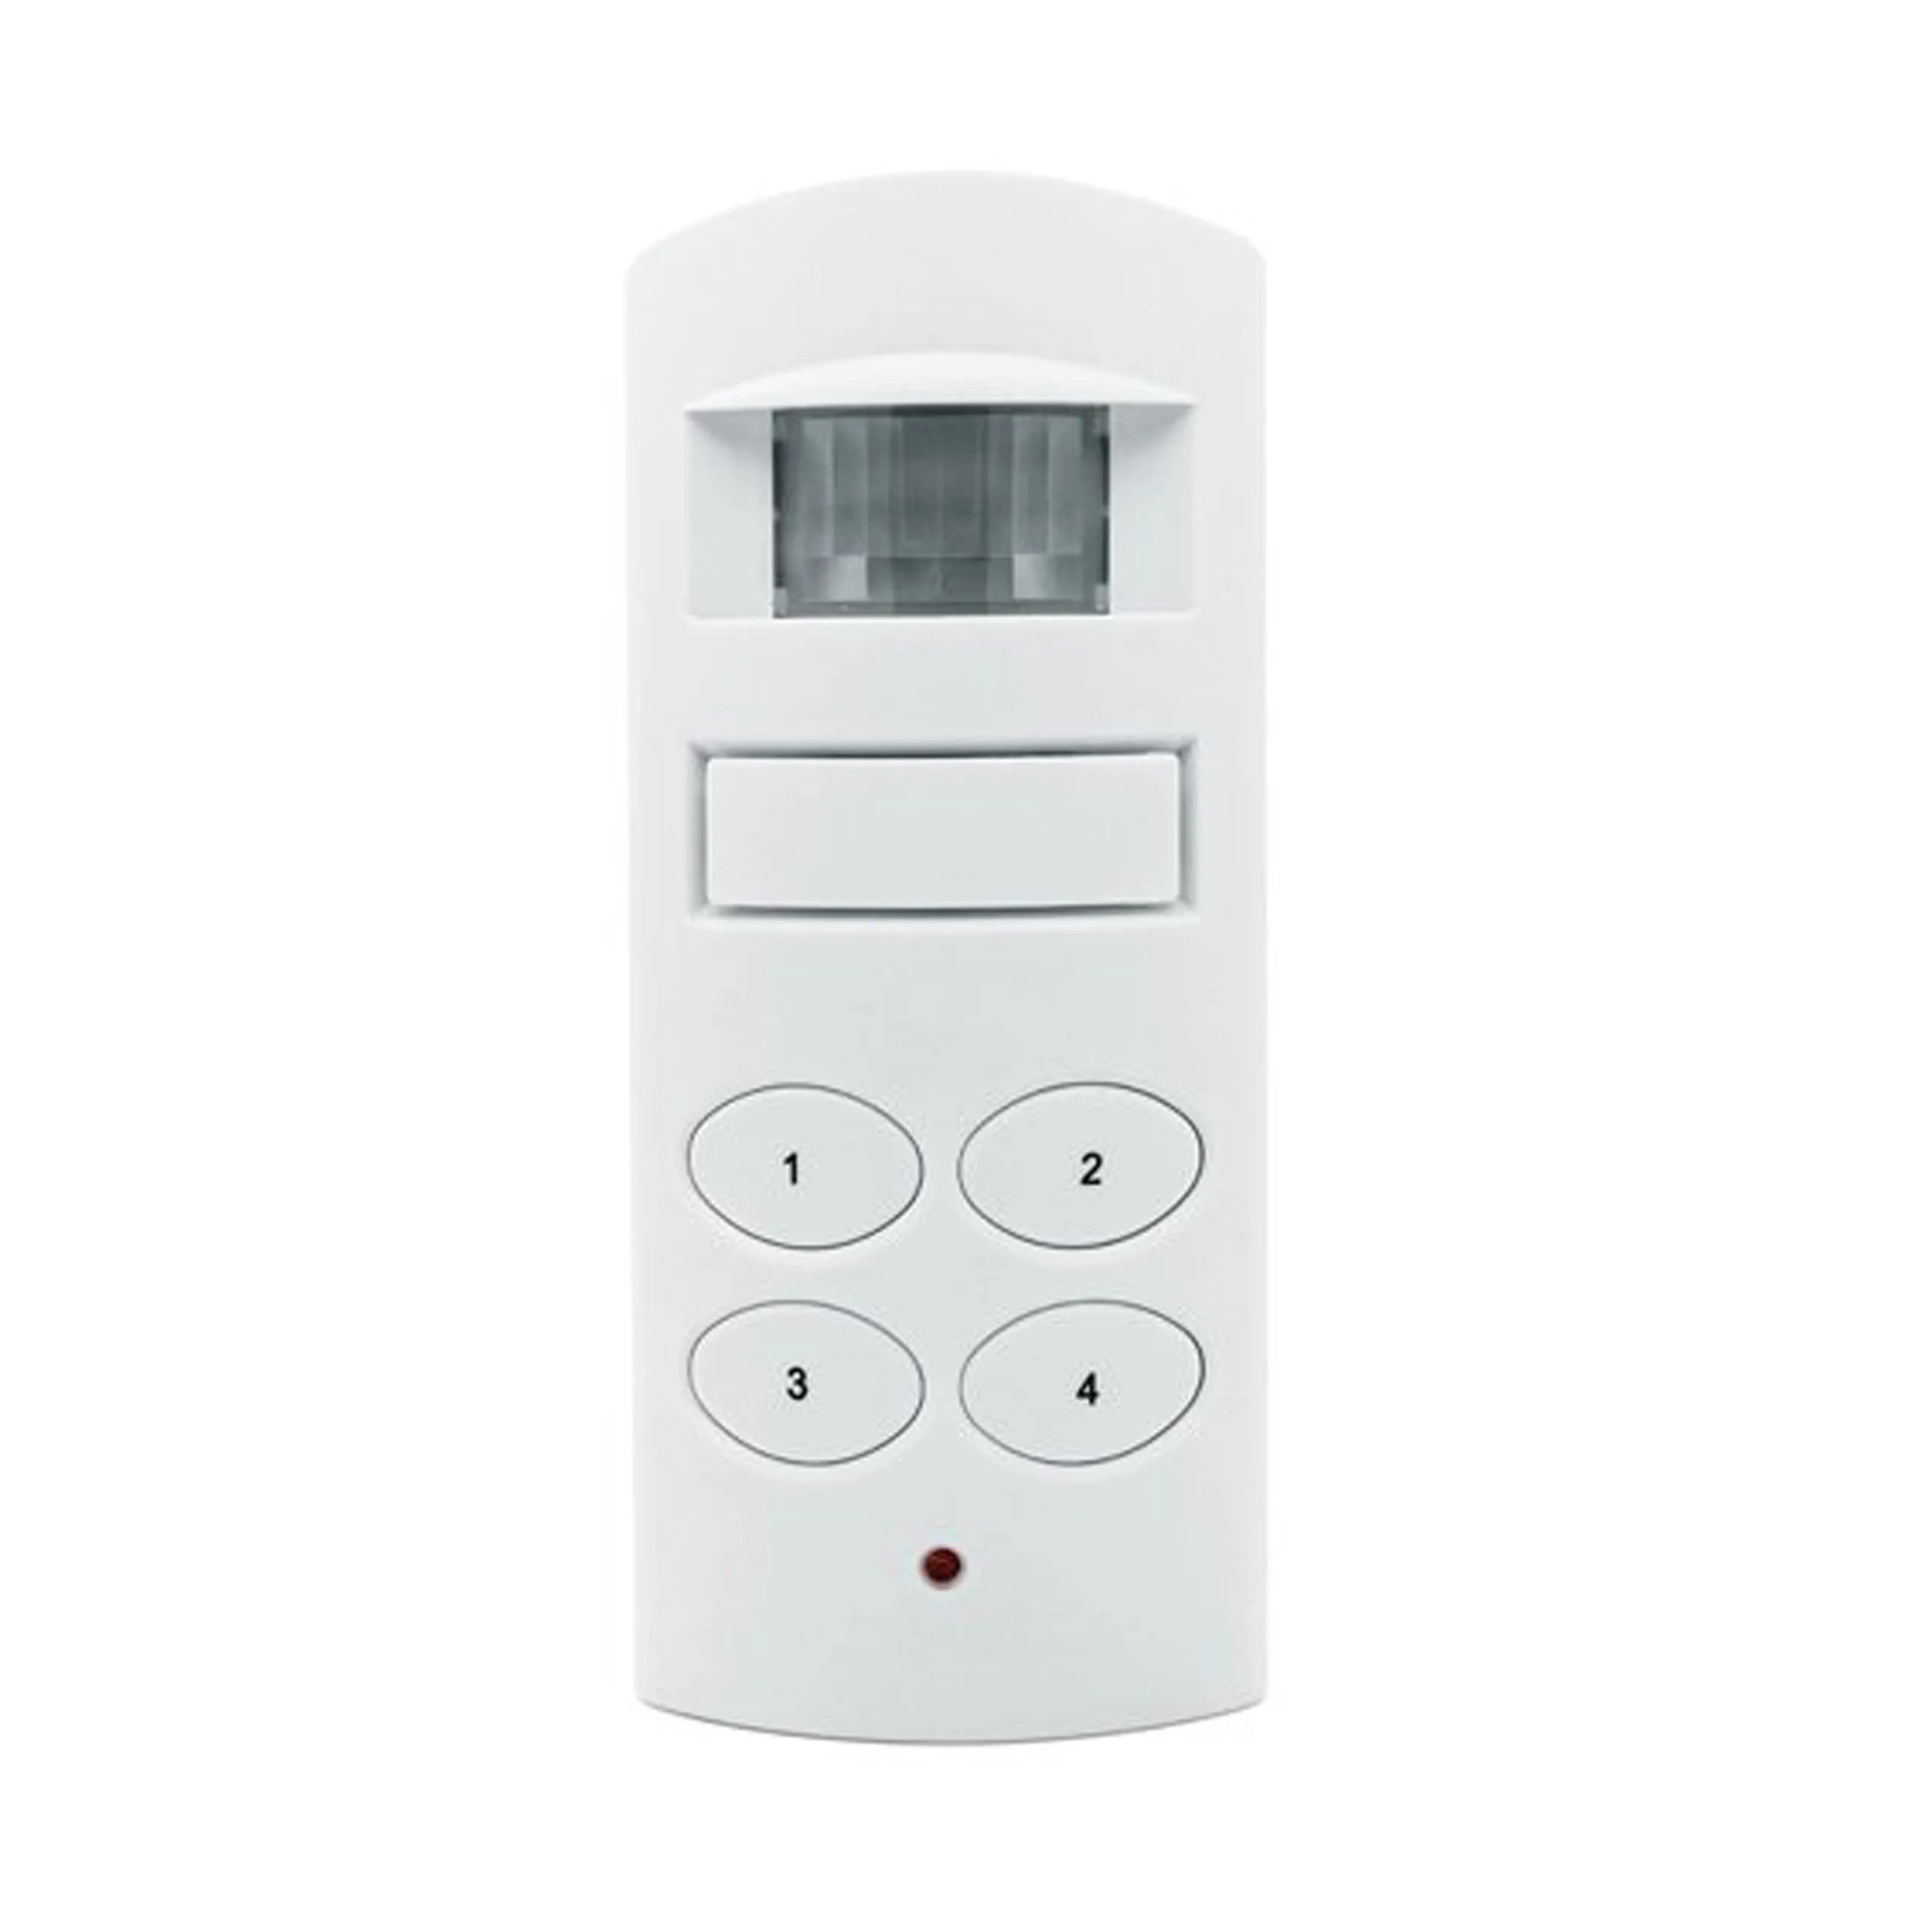 3G Wireless Pir Outdoor Motion Detector Burglar Alarm System Theft Alarm for Home